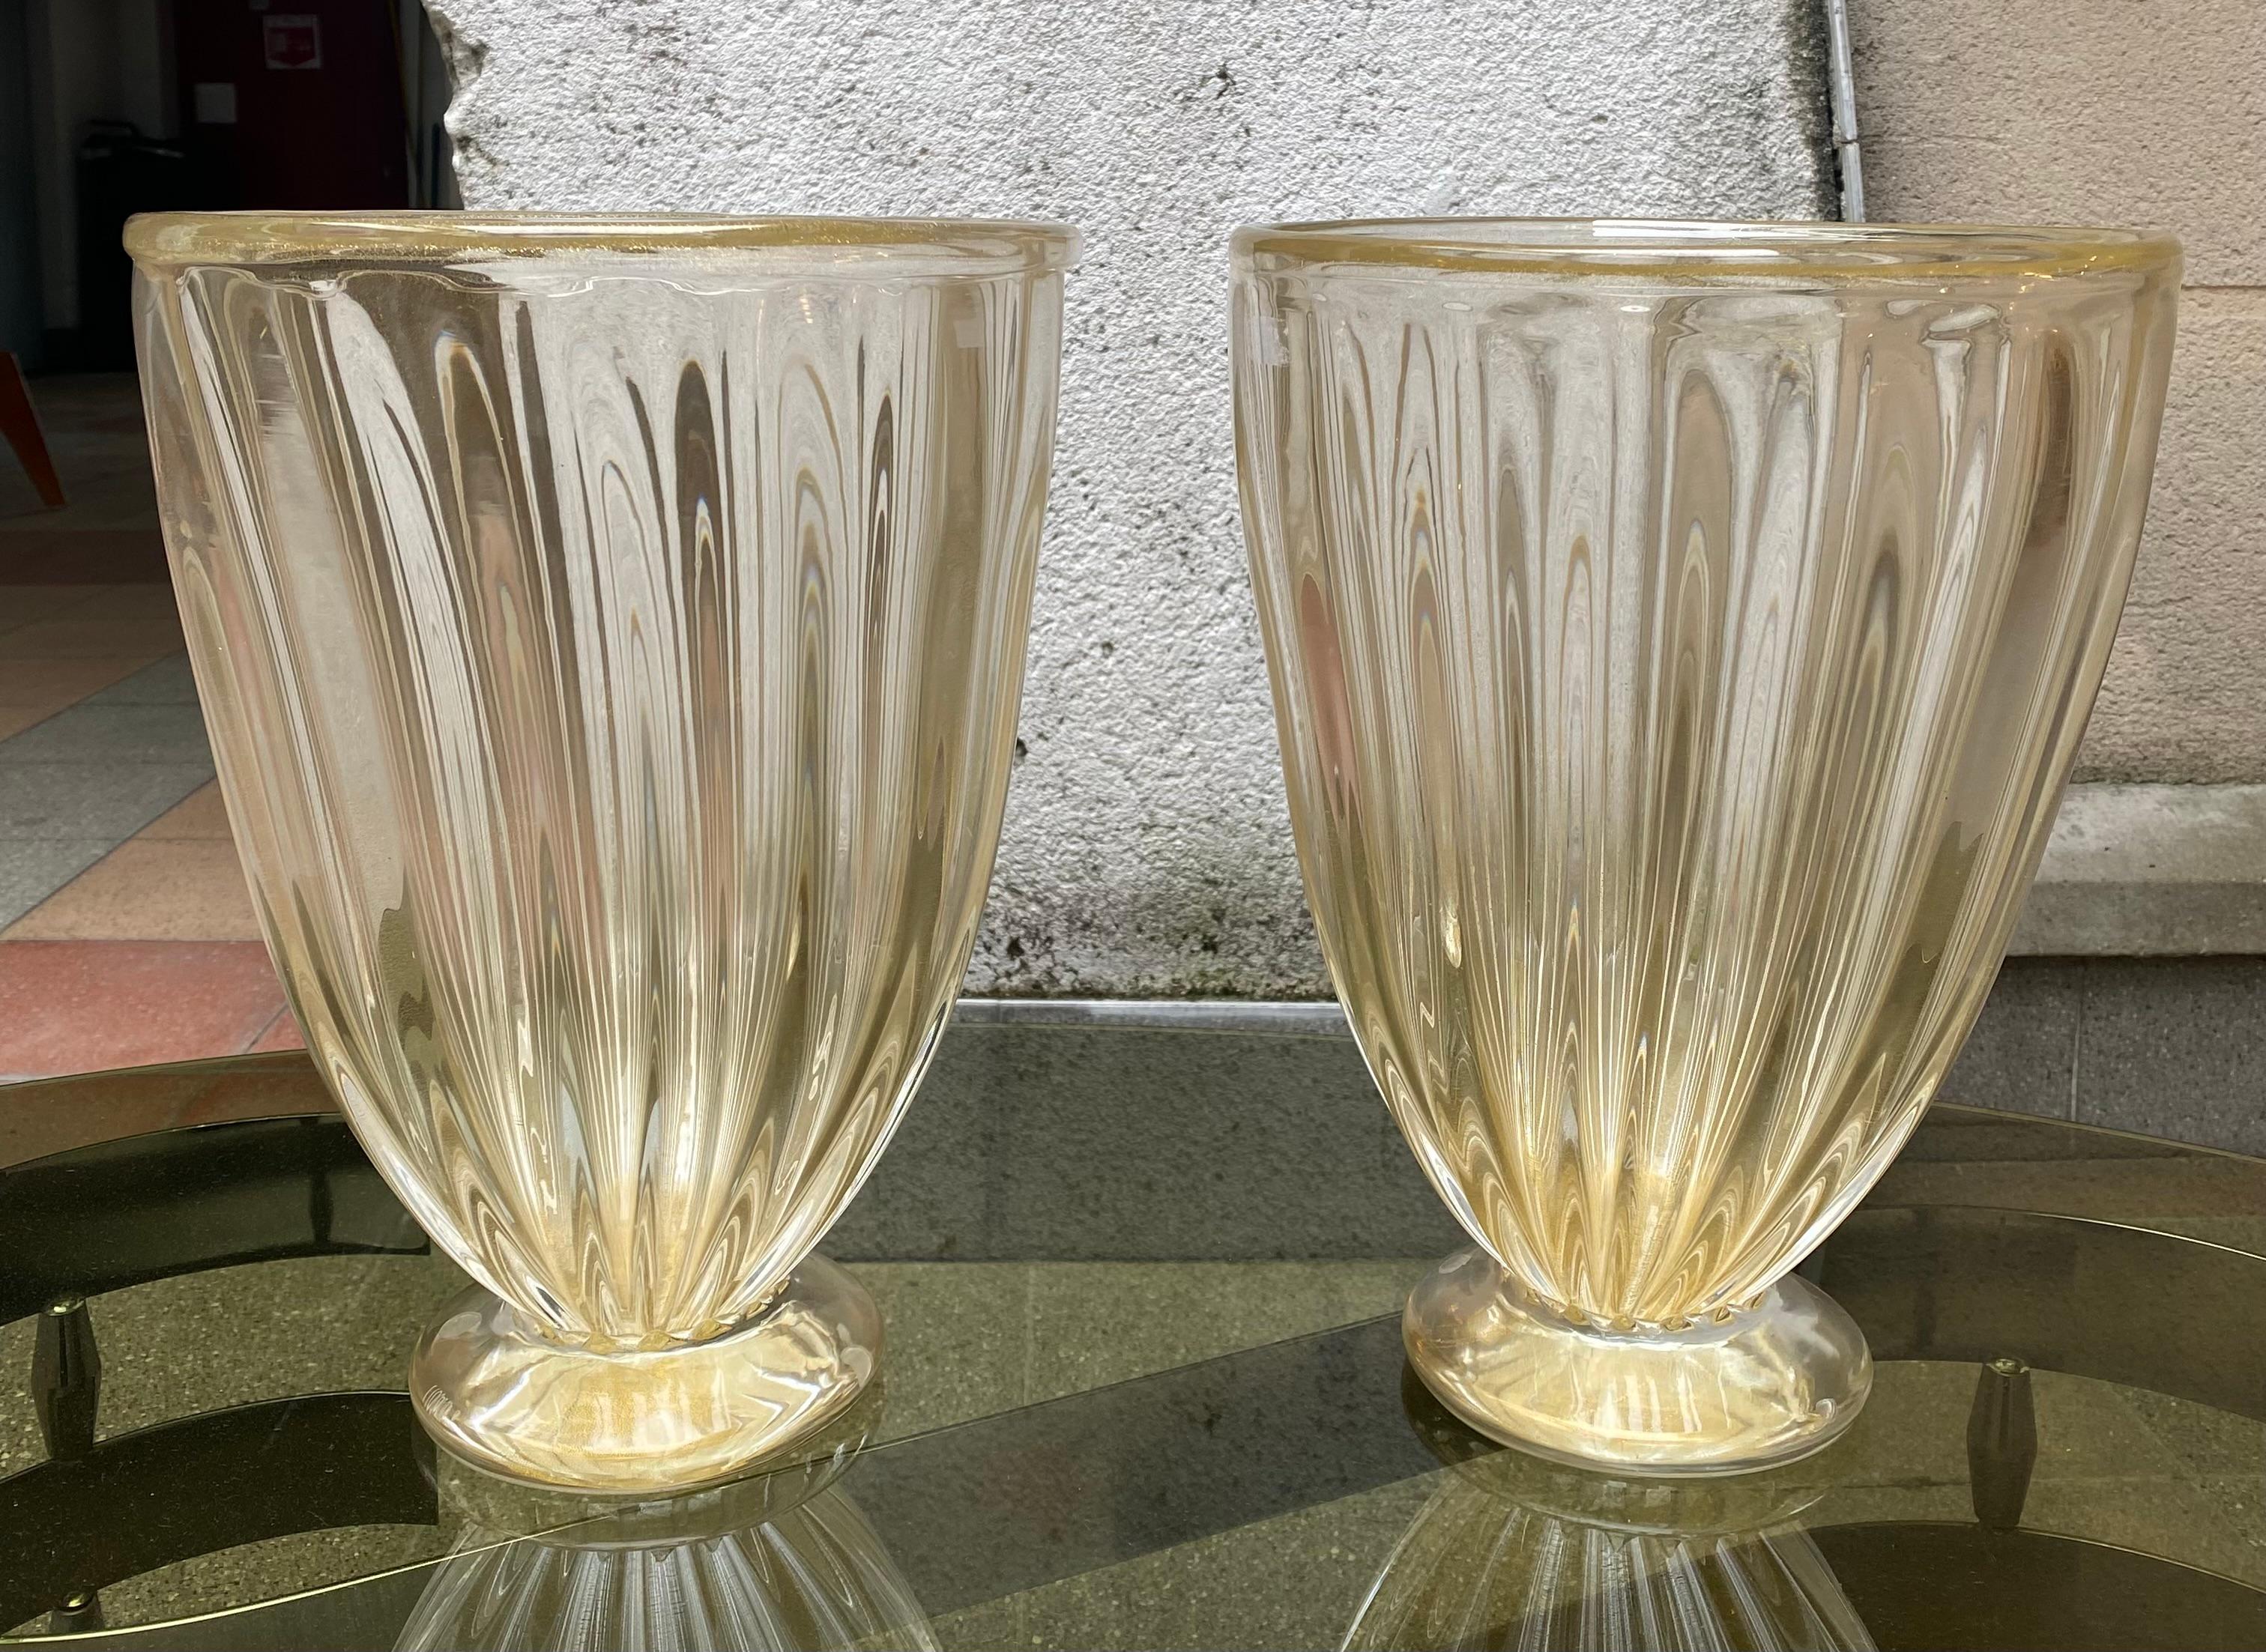 Pair of Alberto Dona Murano vases
Murano glass 
Dimensions : h35xl26cm
Ref : c/1940/2
Price : 2800€ for the pair.